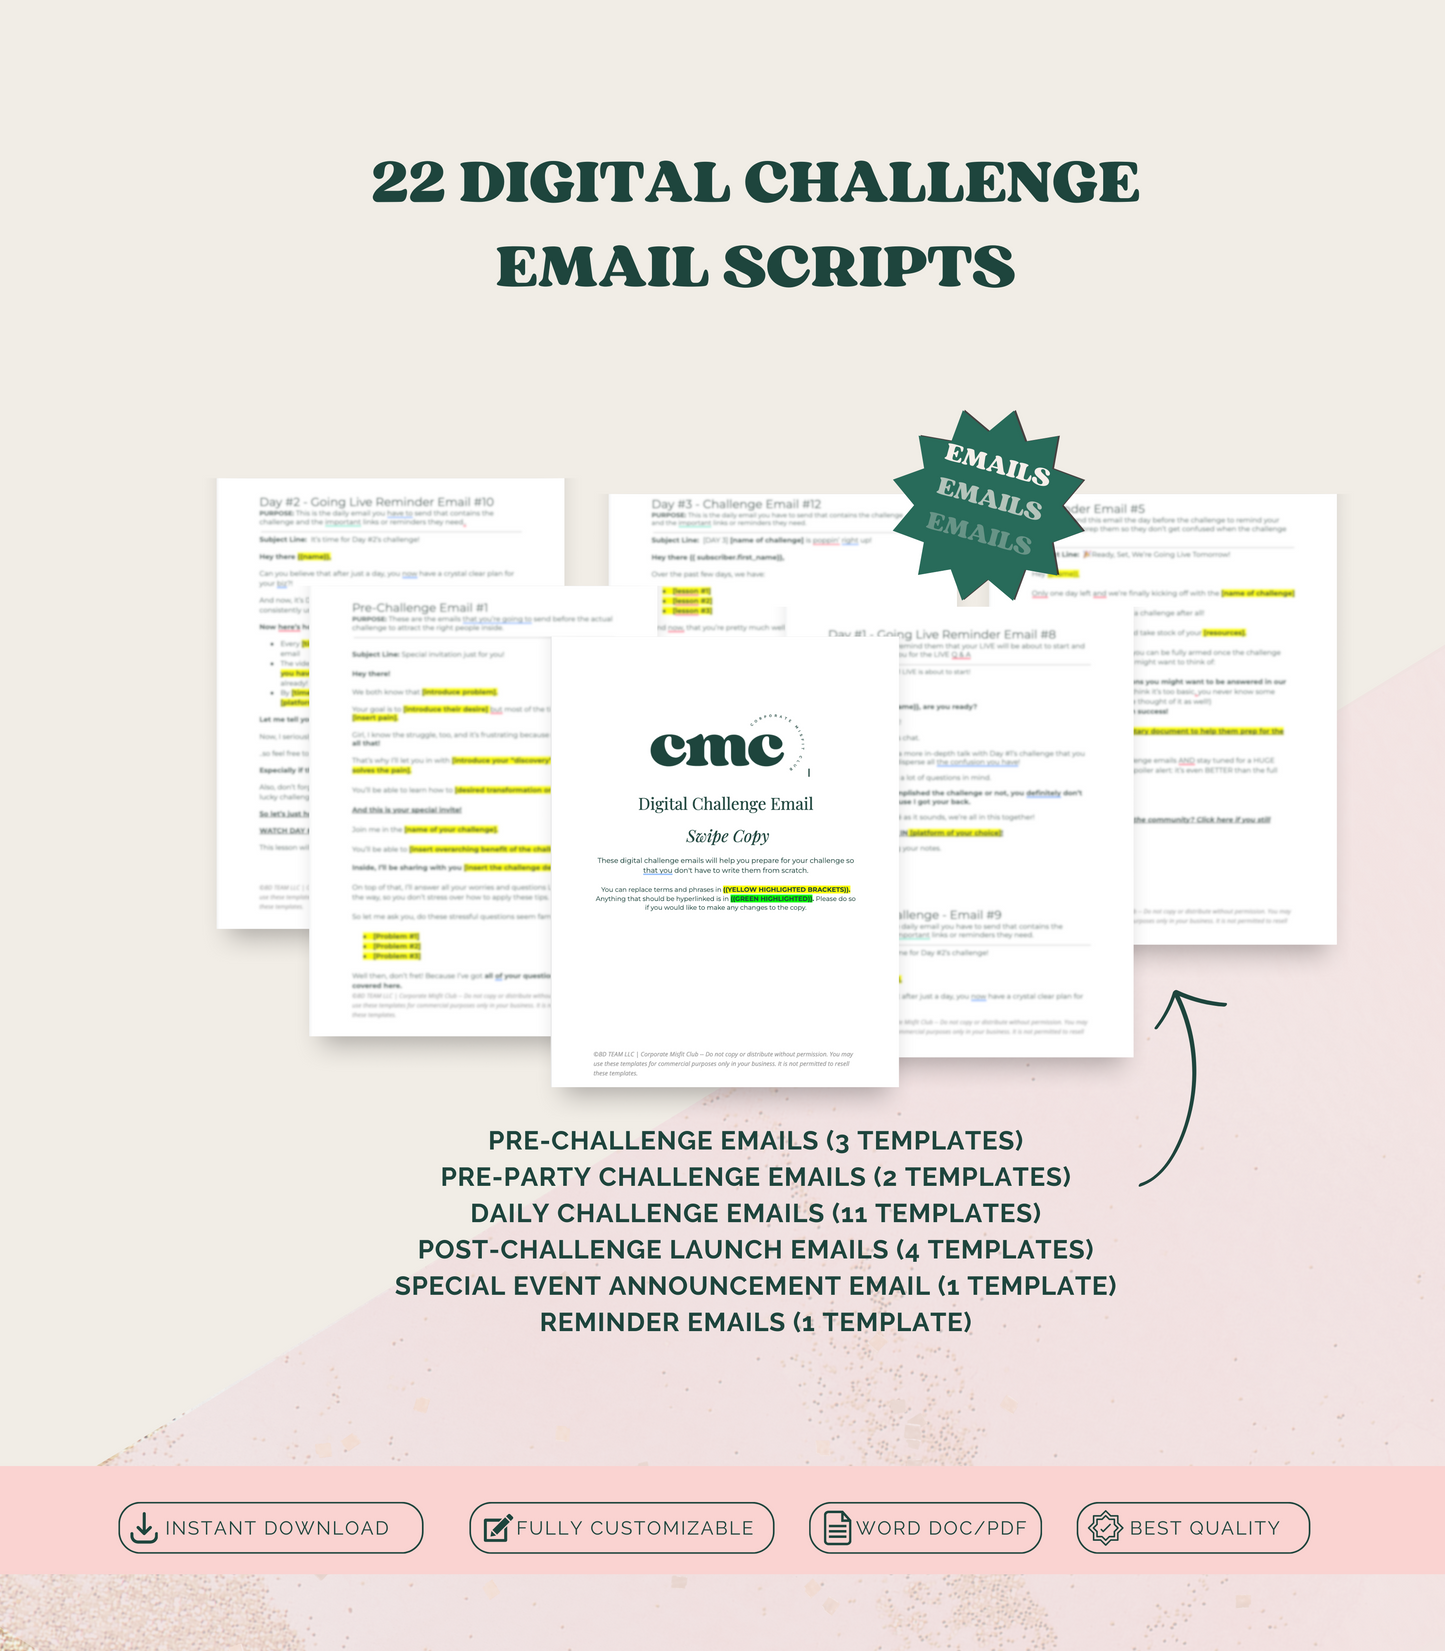 Digital Challenge Success Kit